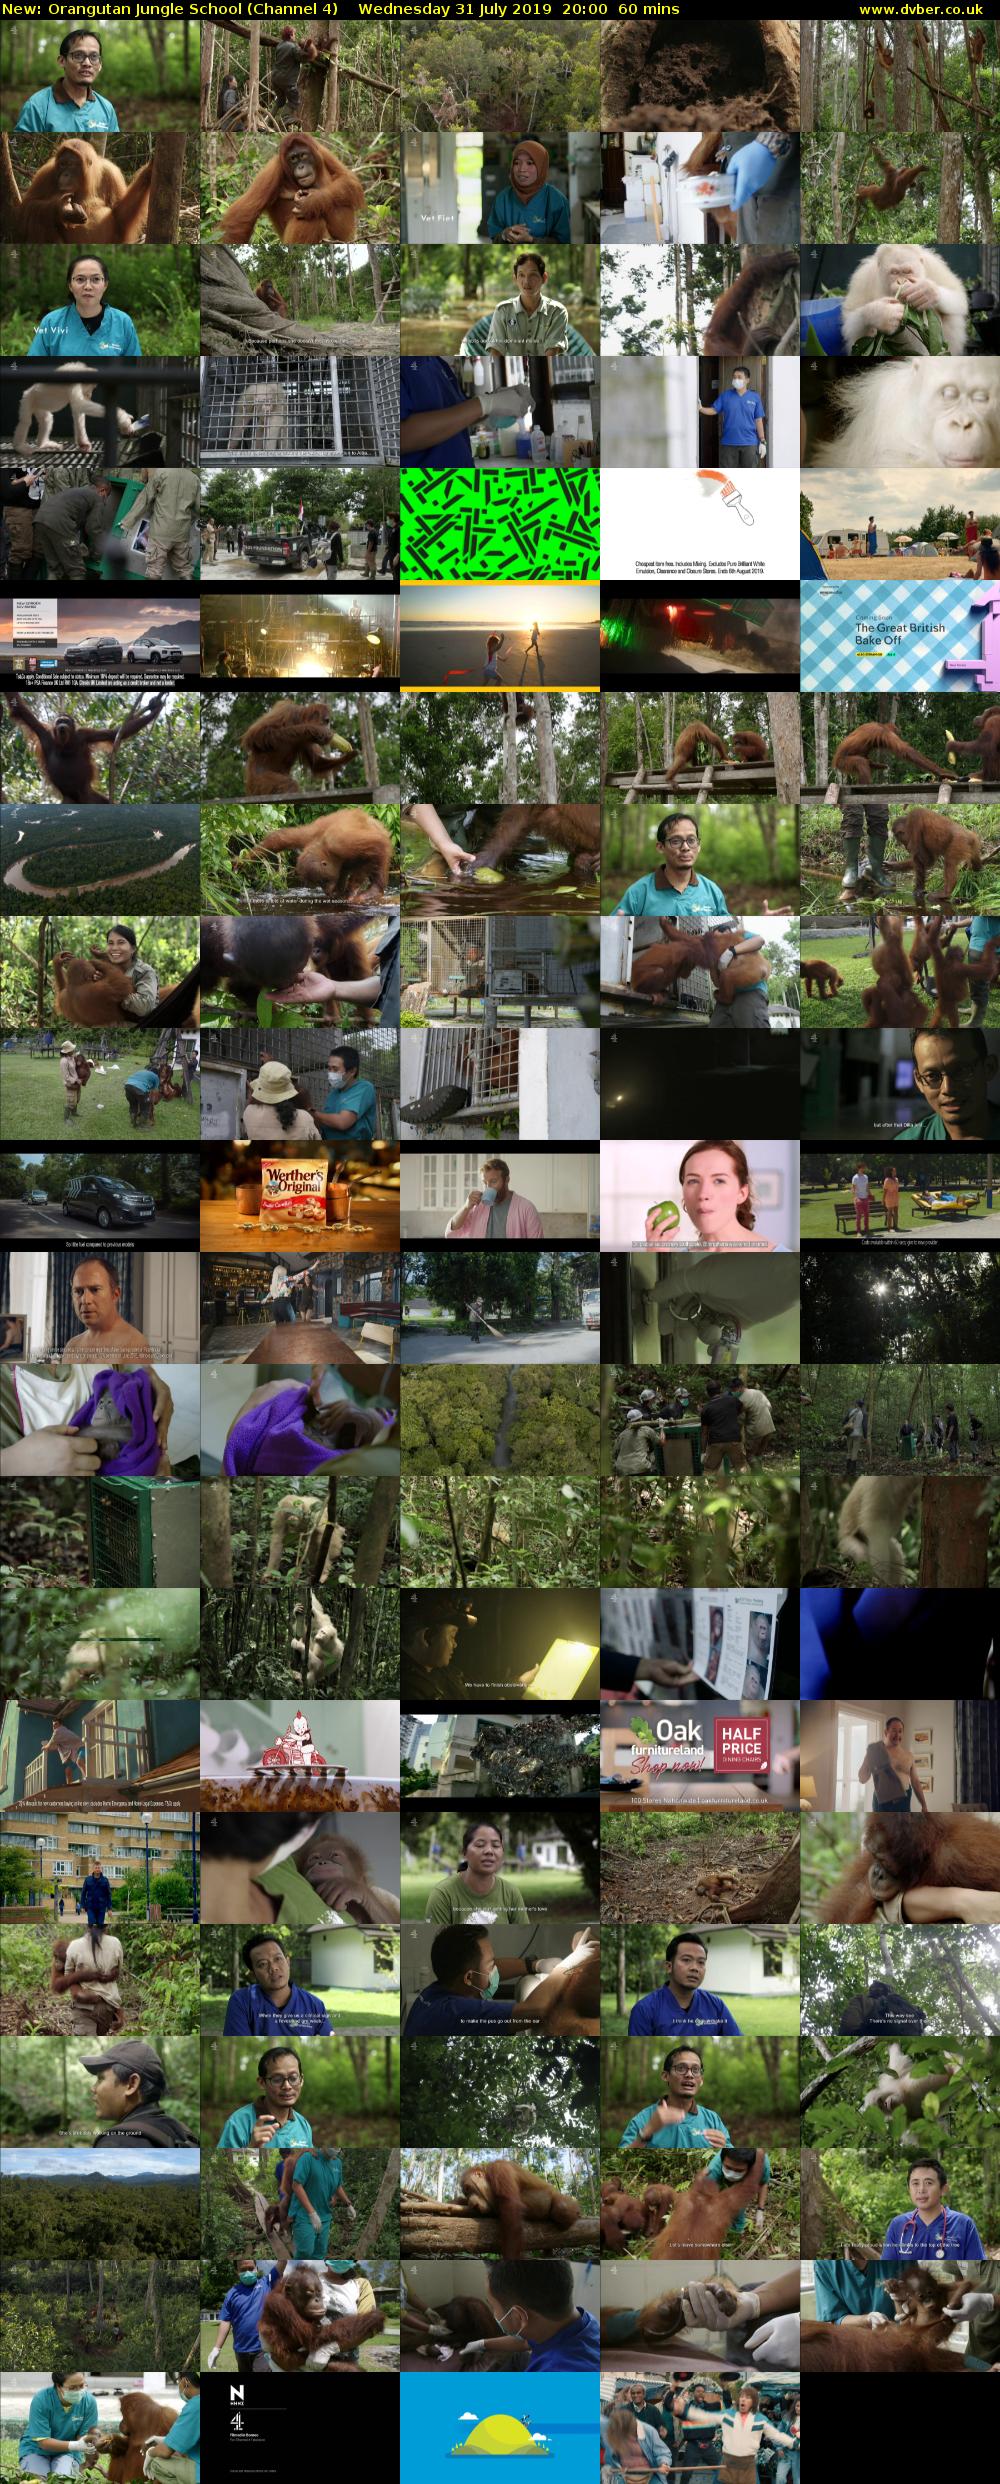 Orangutan Jungle School (Channel 4) Wednesday 31 July 2019 20:00 - 21:00